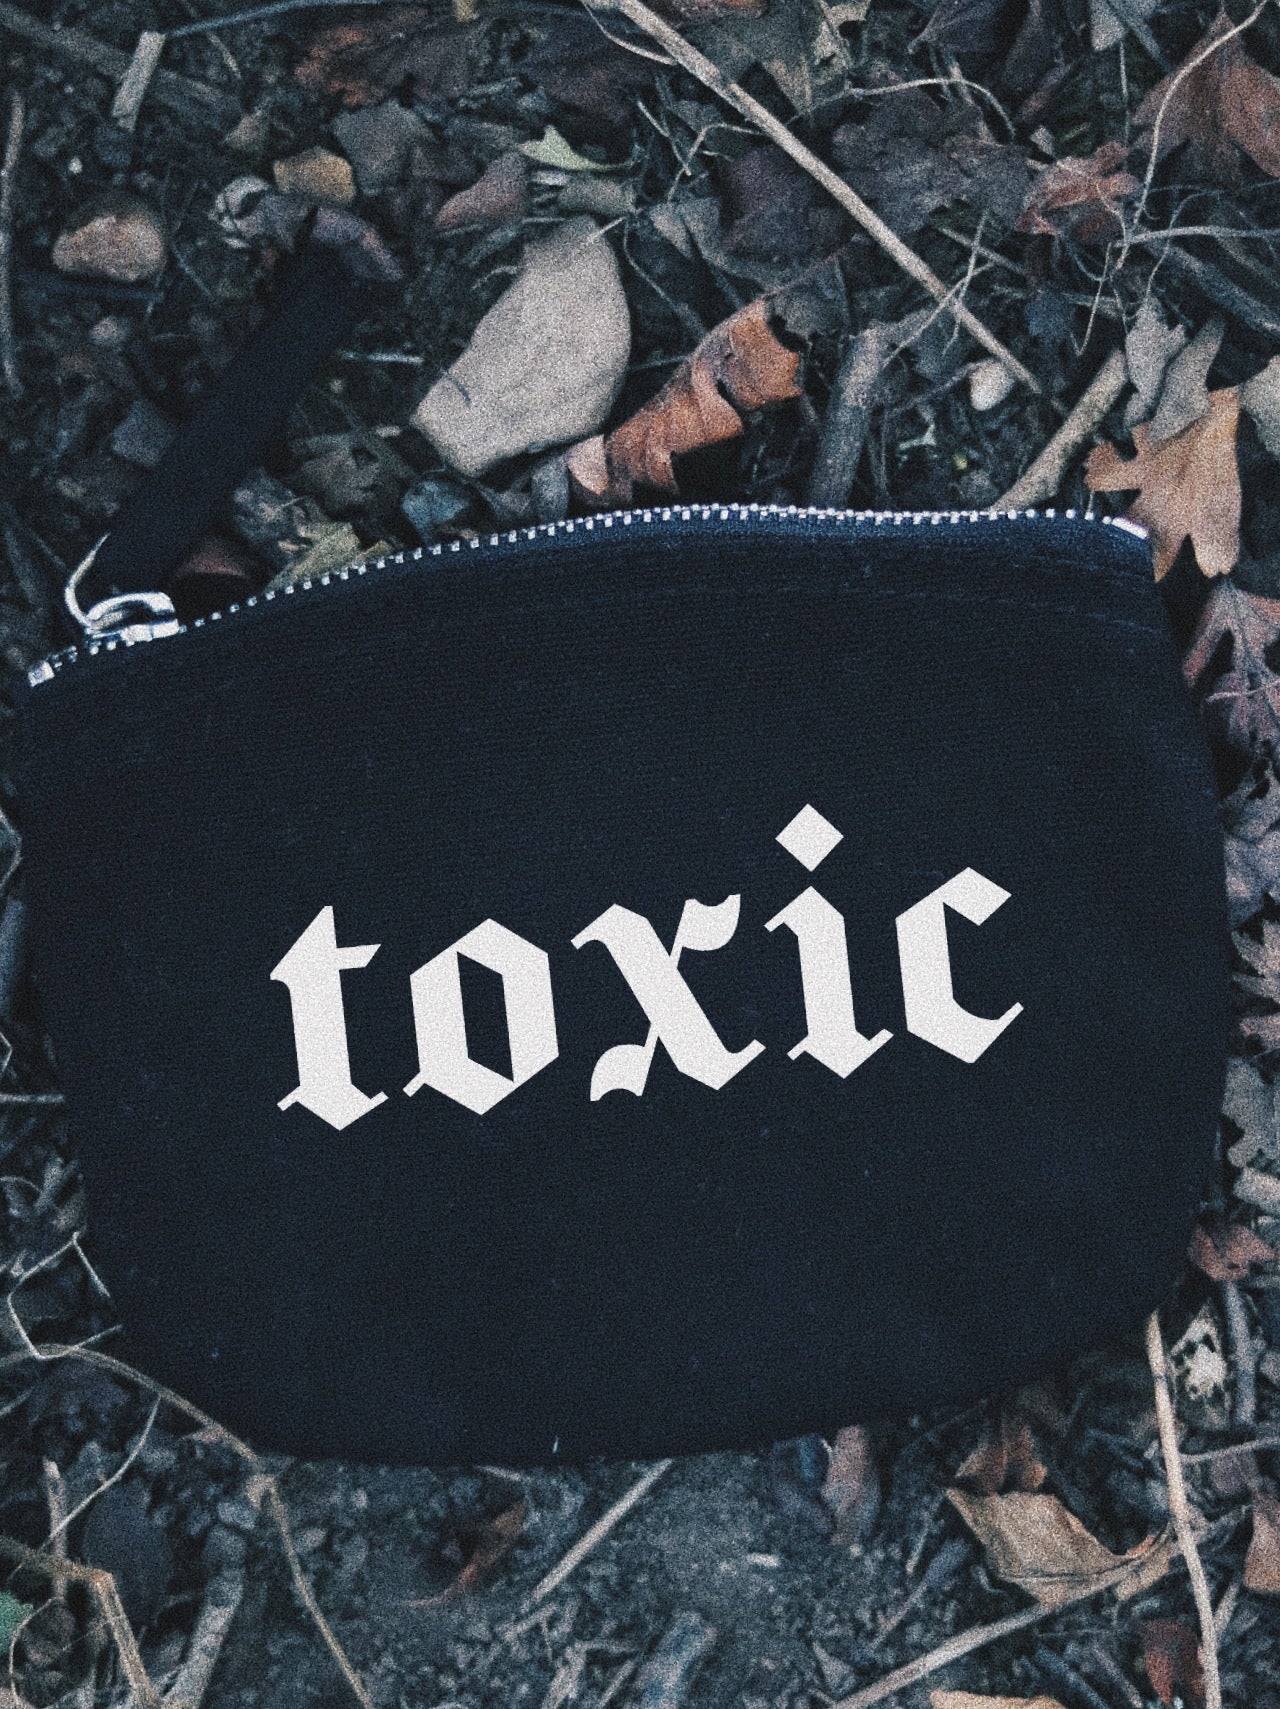 Toxic - Mini Pouch